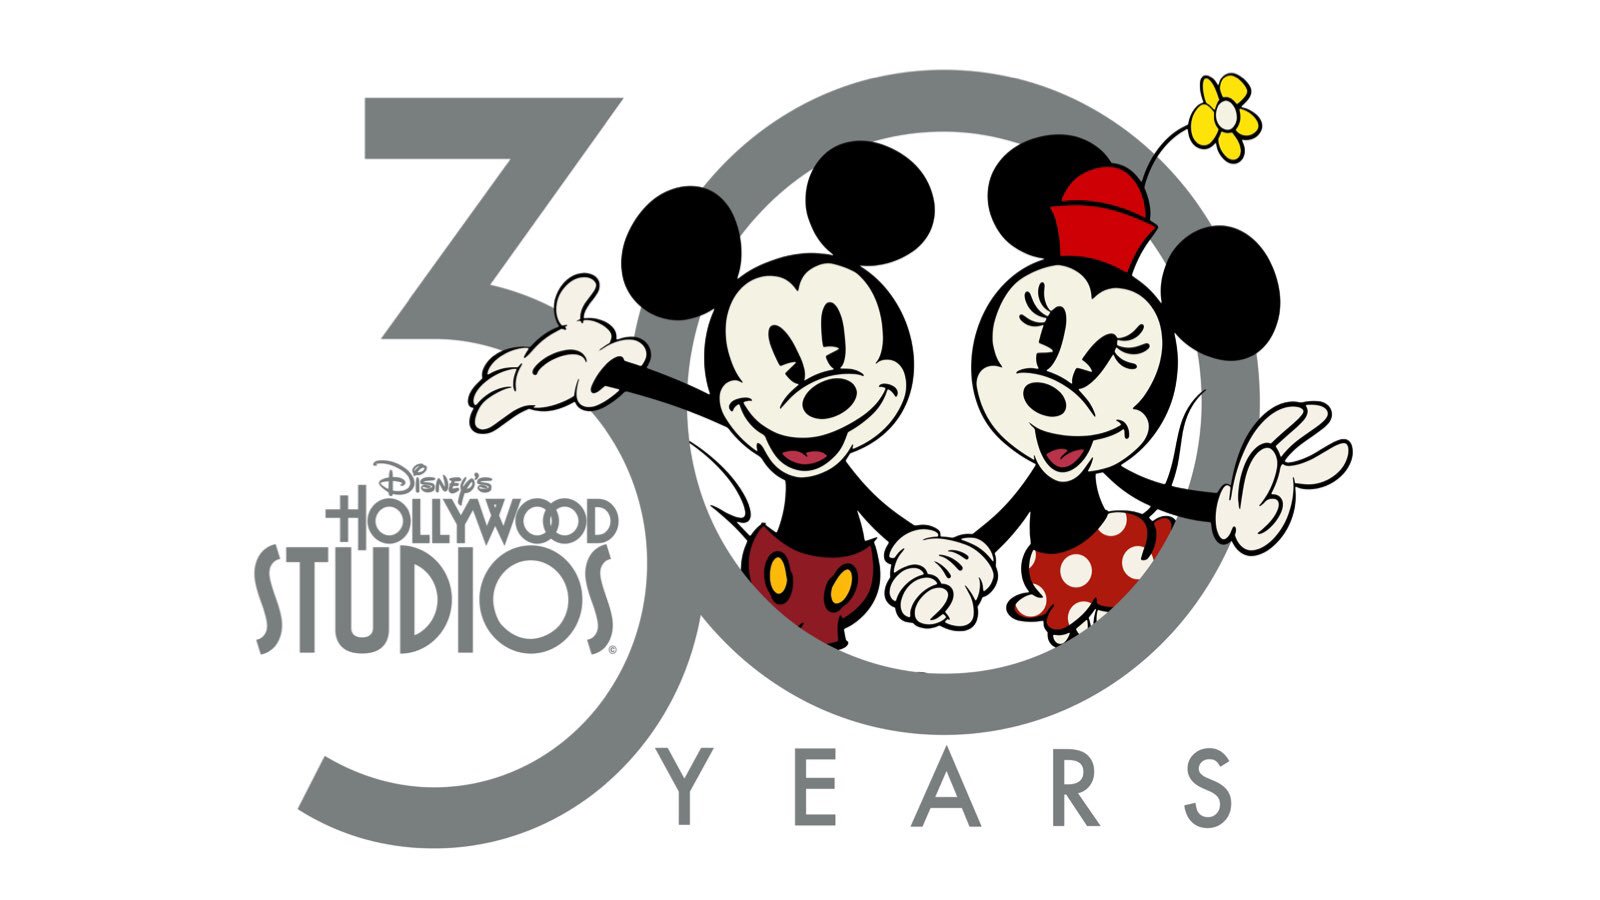 Disney Releases Logo For Disney’s Hollywood Studios 30th Anniversary